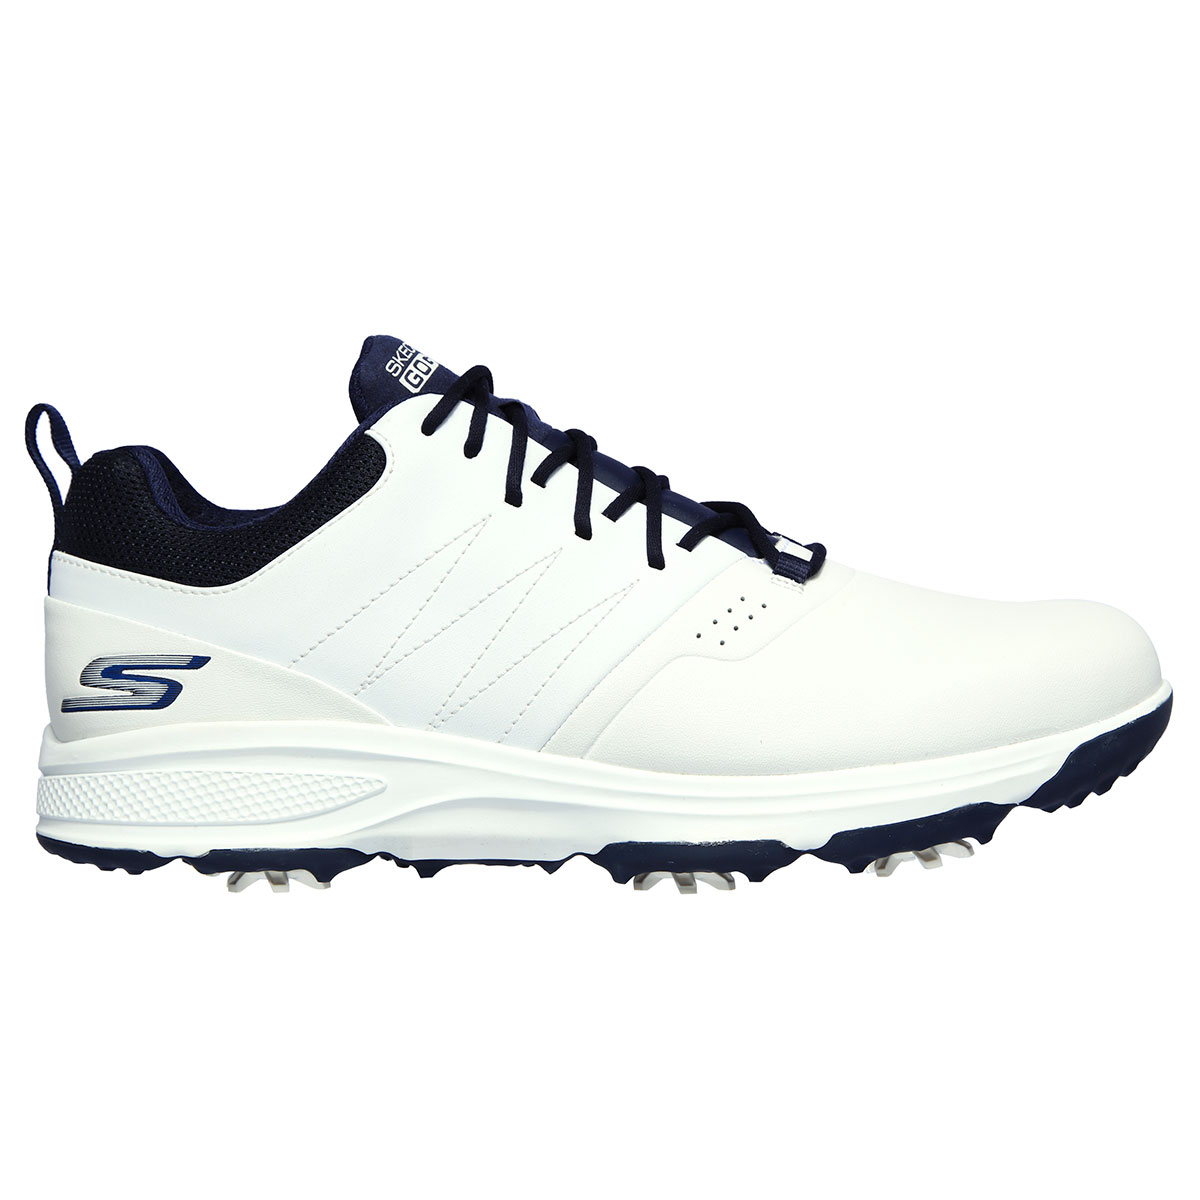 Contaminado girar Preconcepción Skechers Men's Torque Pro Waterproof Spiked Golf Shoes from american golf